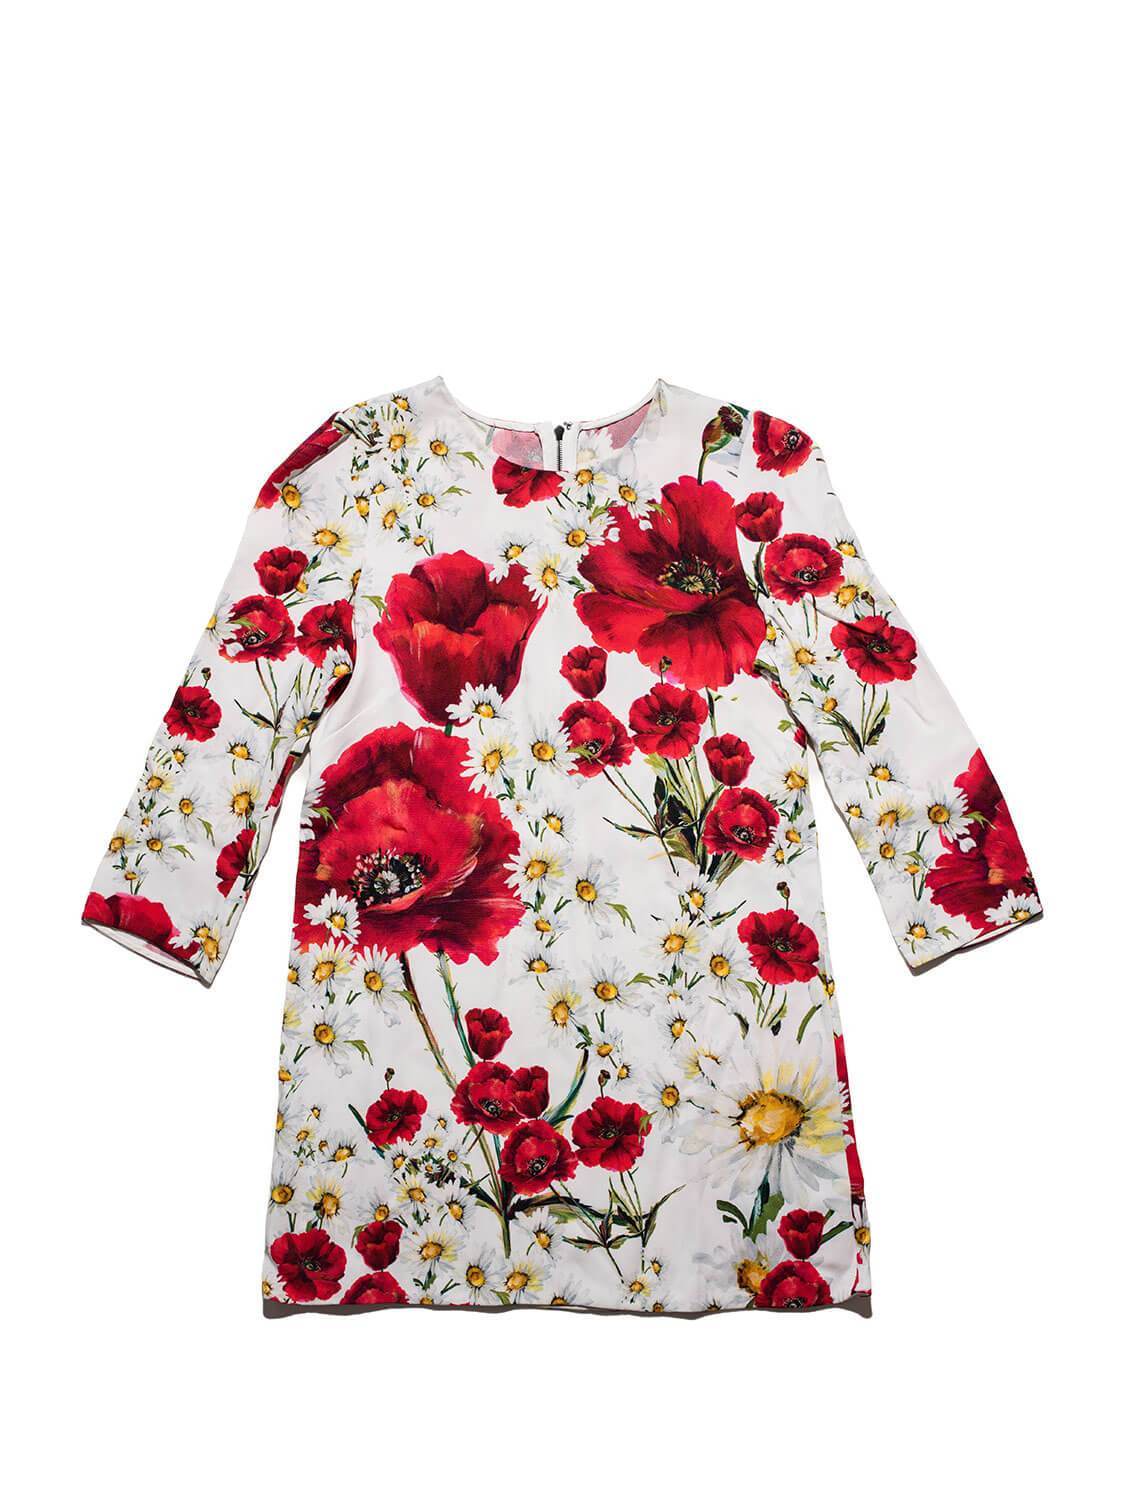 Dolce & Gabbana Silk Floral Top Red White-designer resale